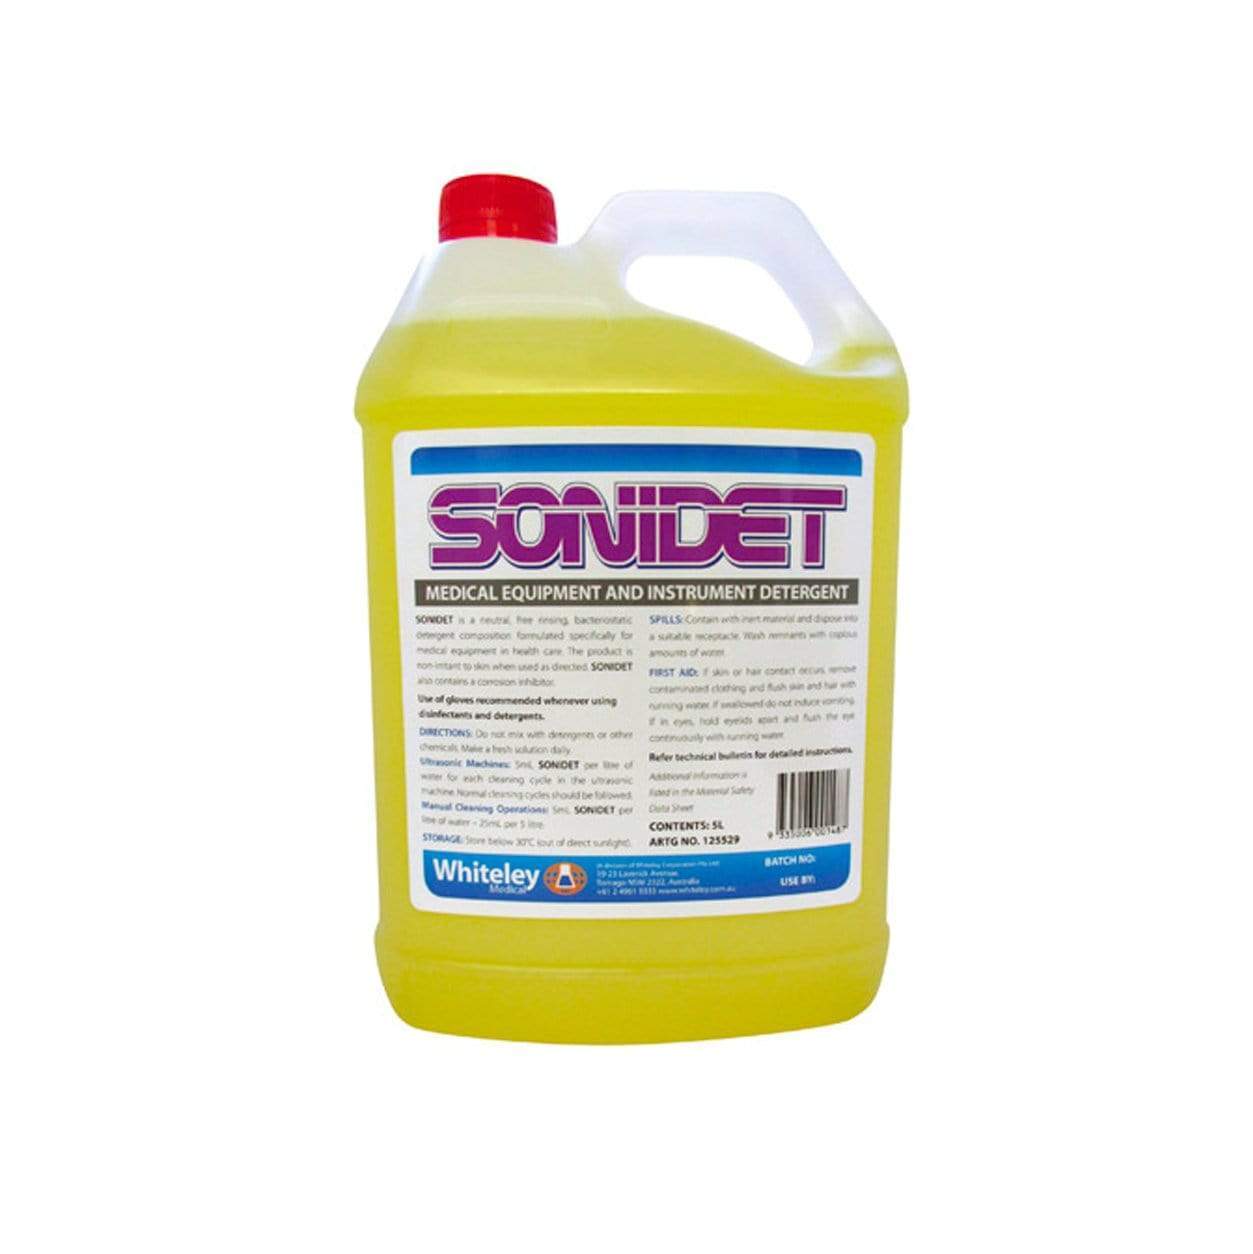 Sonidet Ultrasonic Medical Equipment and
Instrument Detergent